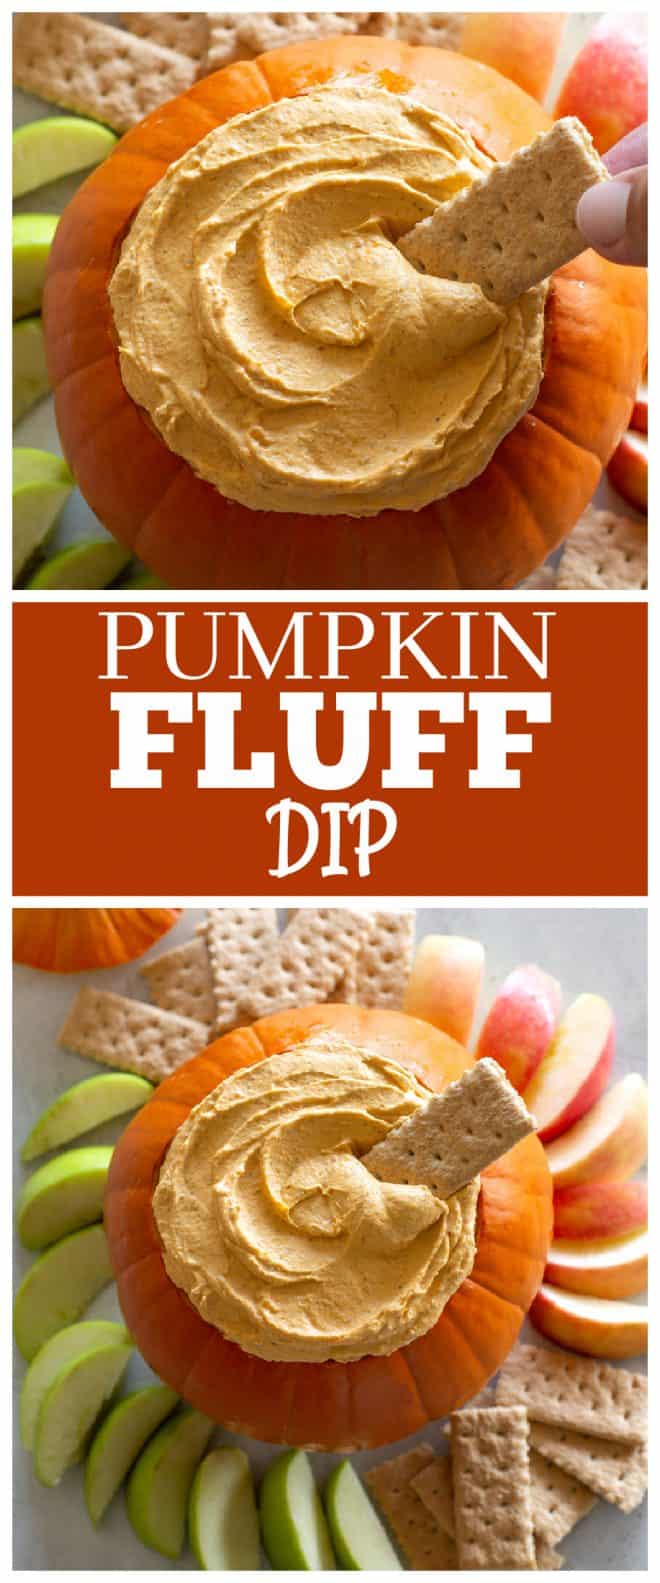 fb image - Pumpkin Fluff Dip